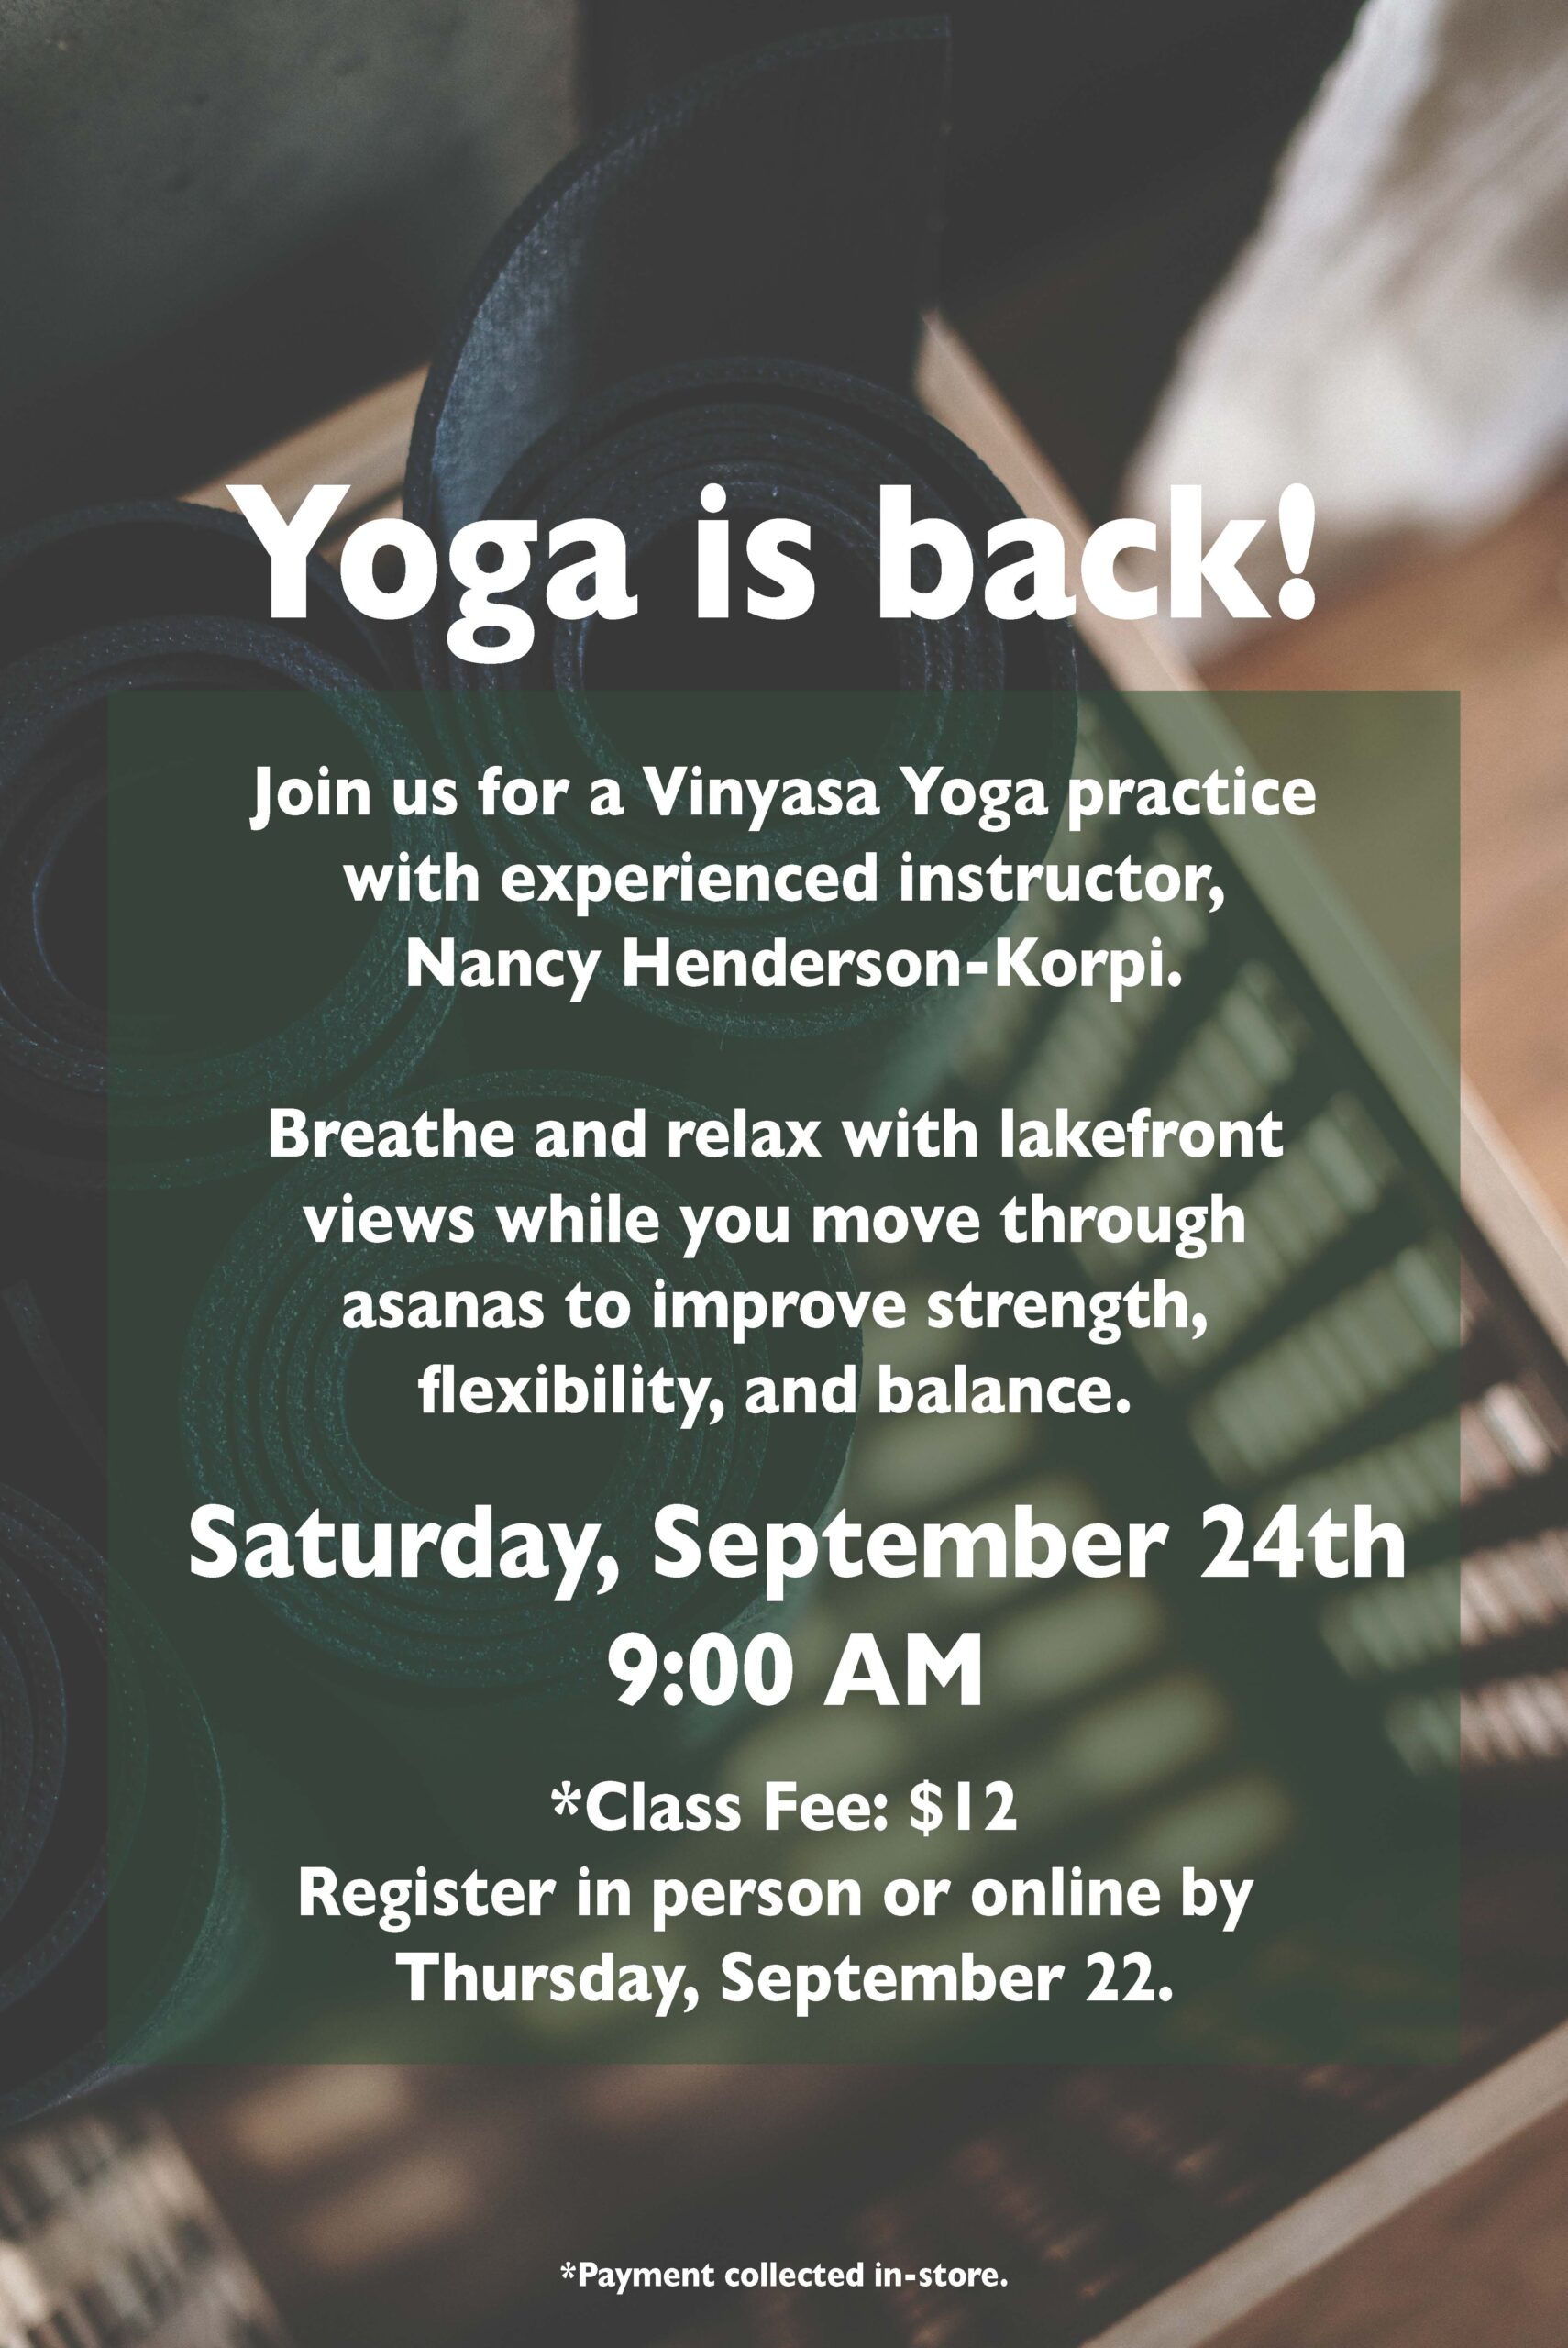 Vinyasa Yoga Class